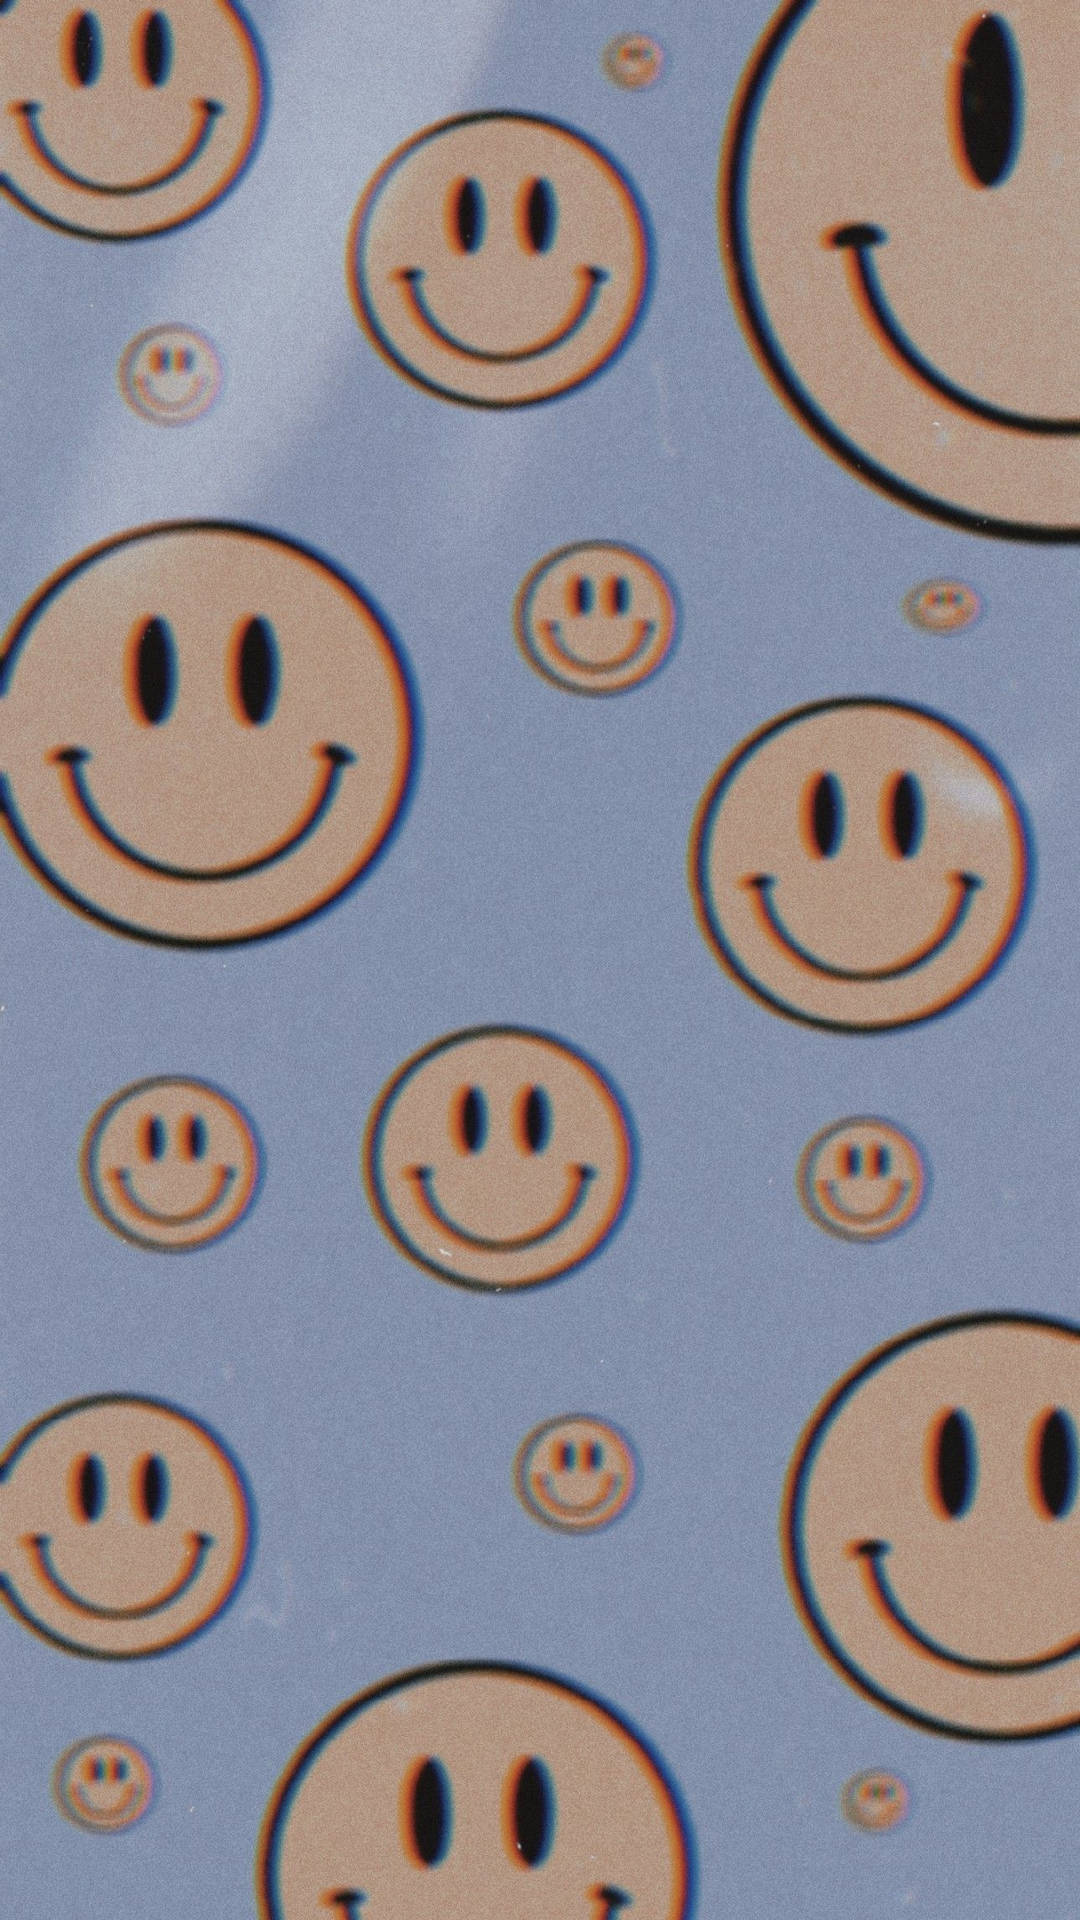 Preppy Smiley Face Retro Pattern Wallpaper